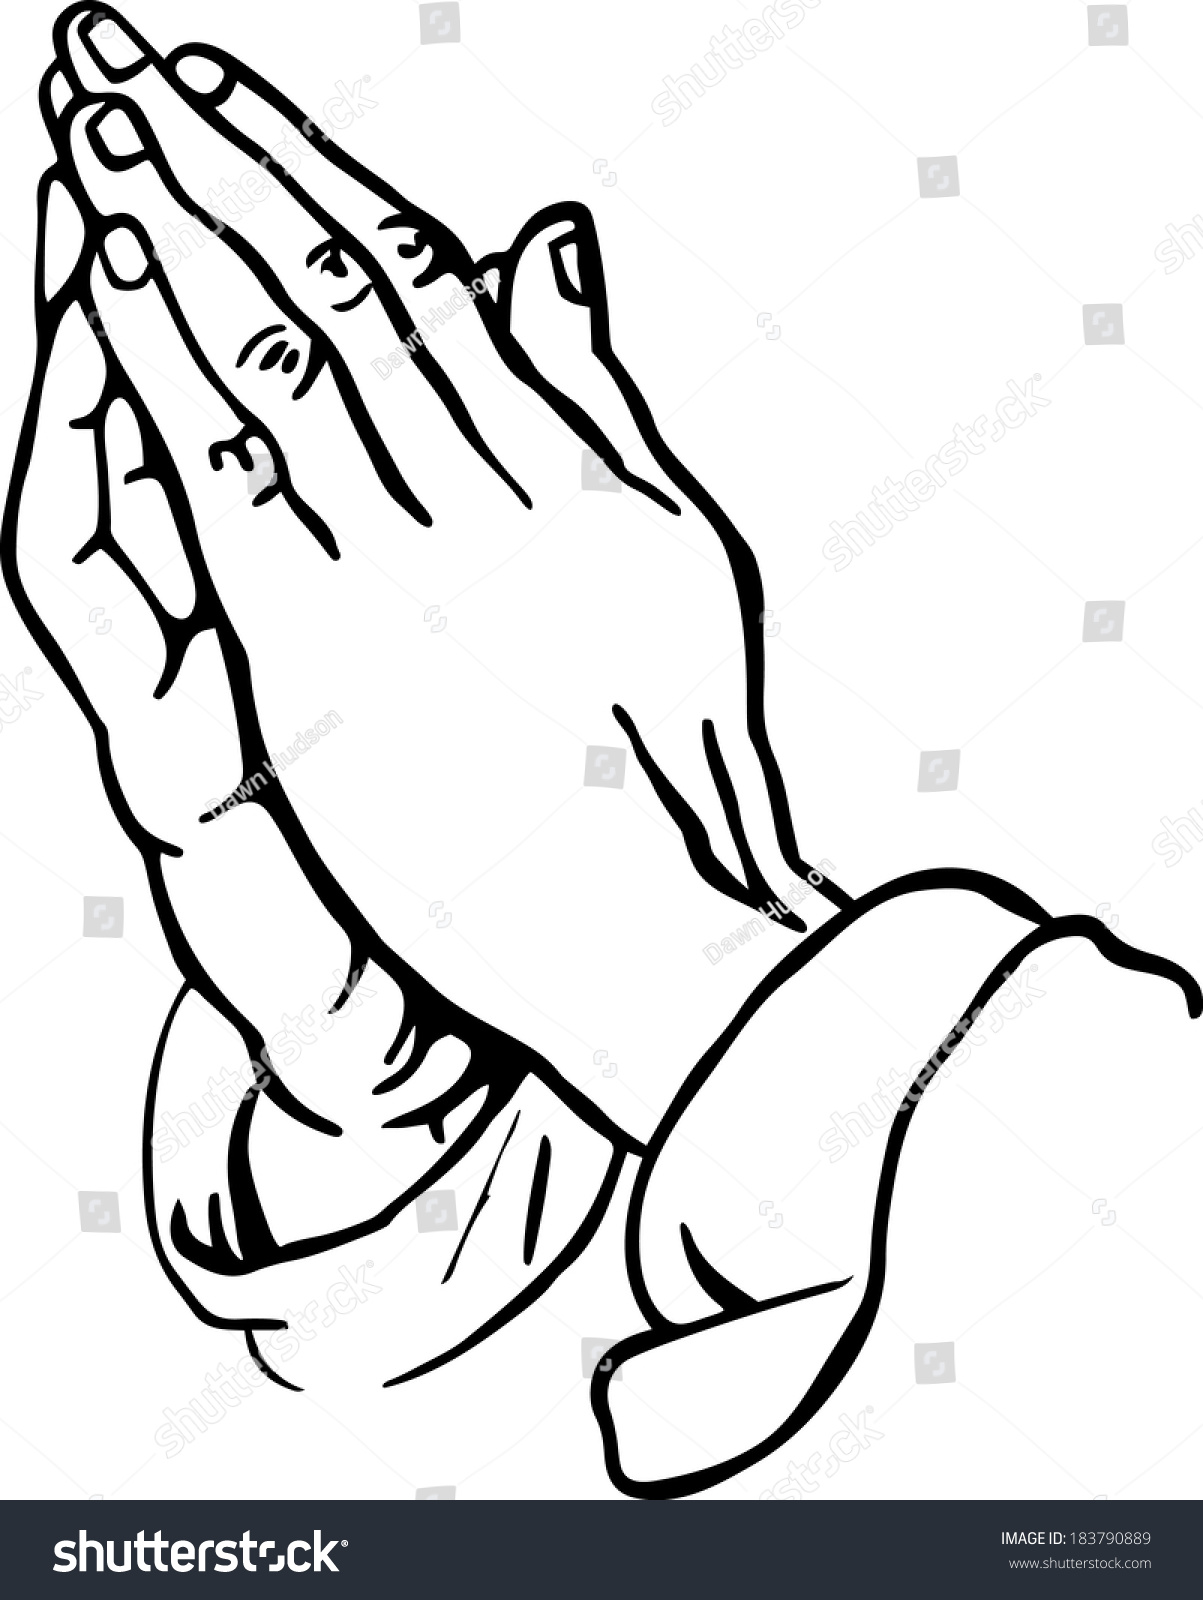 Line Drawing Praying Hands Stock Vector 183790889 - Shutterstock